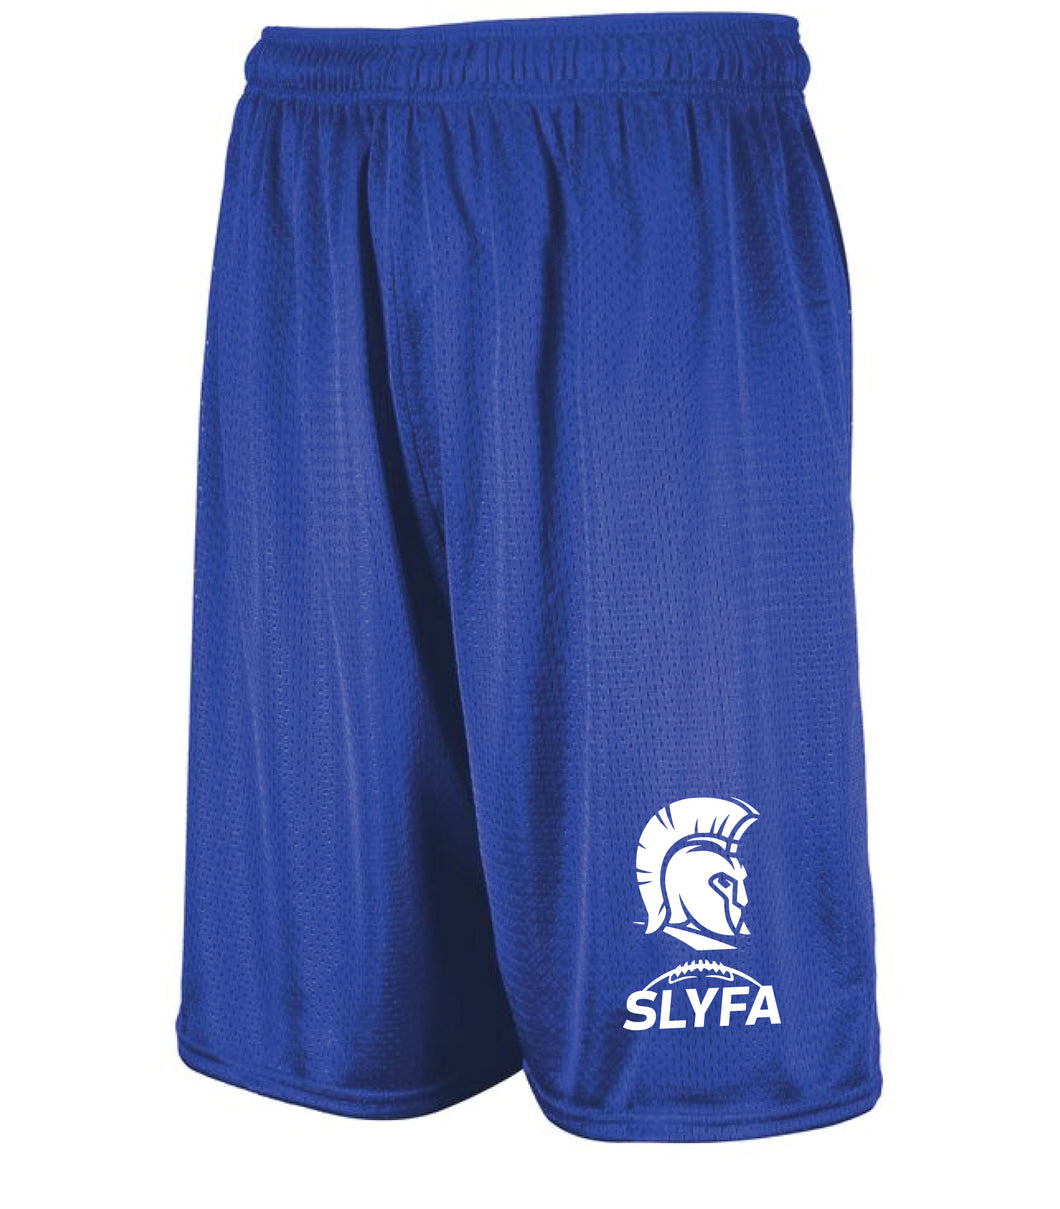 SLYFA (Lehigh Valley) Russell Athletic Tech Shorts - Royal - 5KounT